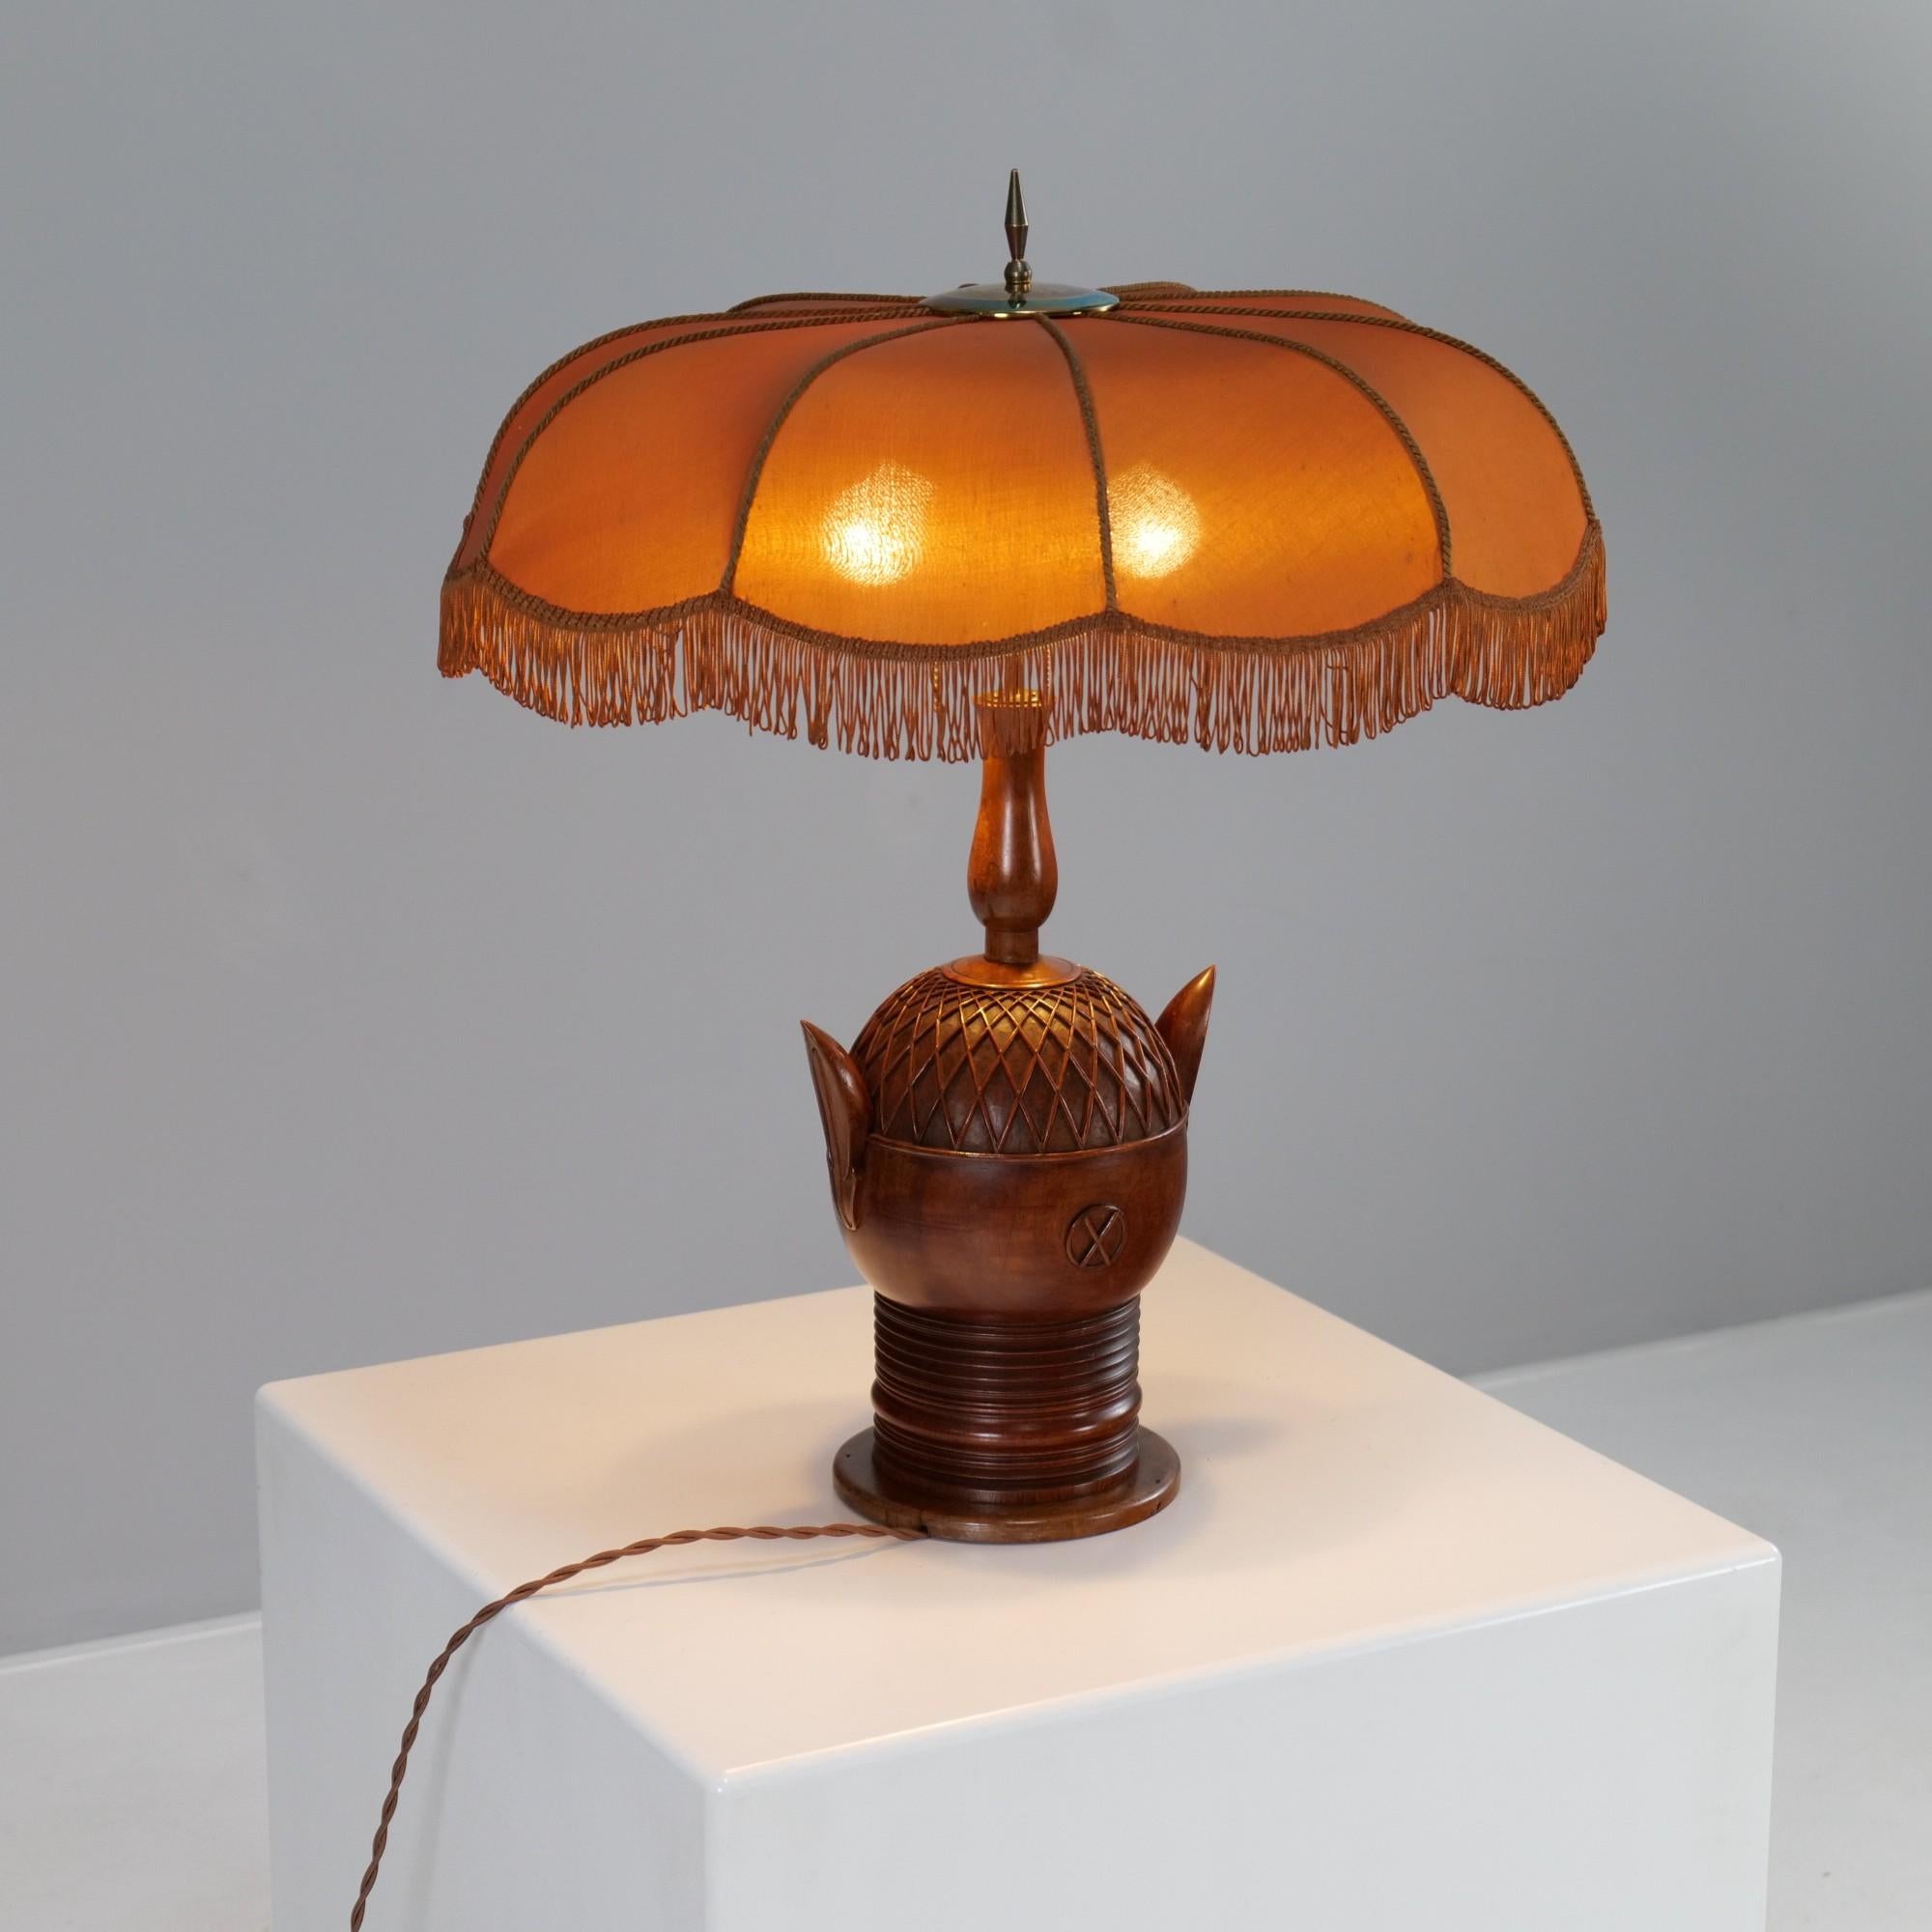 Fabric Fritz August Breuhaus de Groot, Expressionist table lamp for Mikado Werkstätten